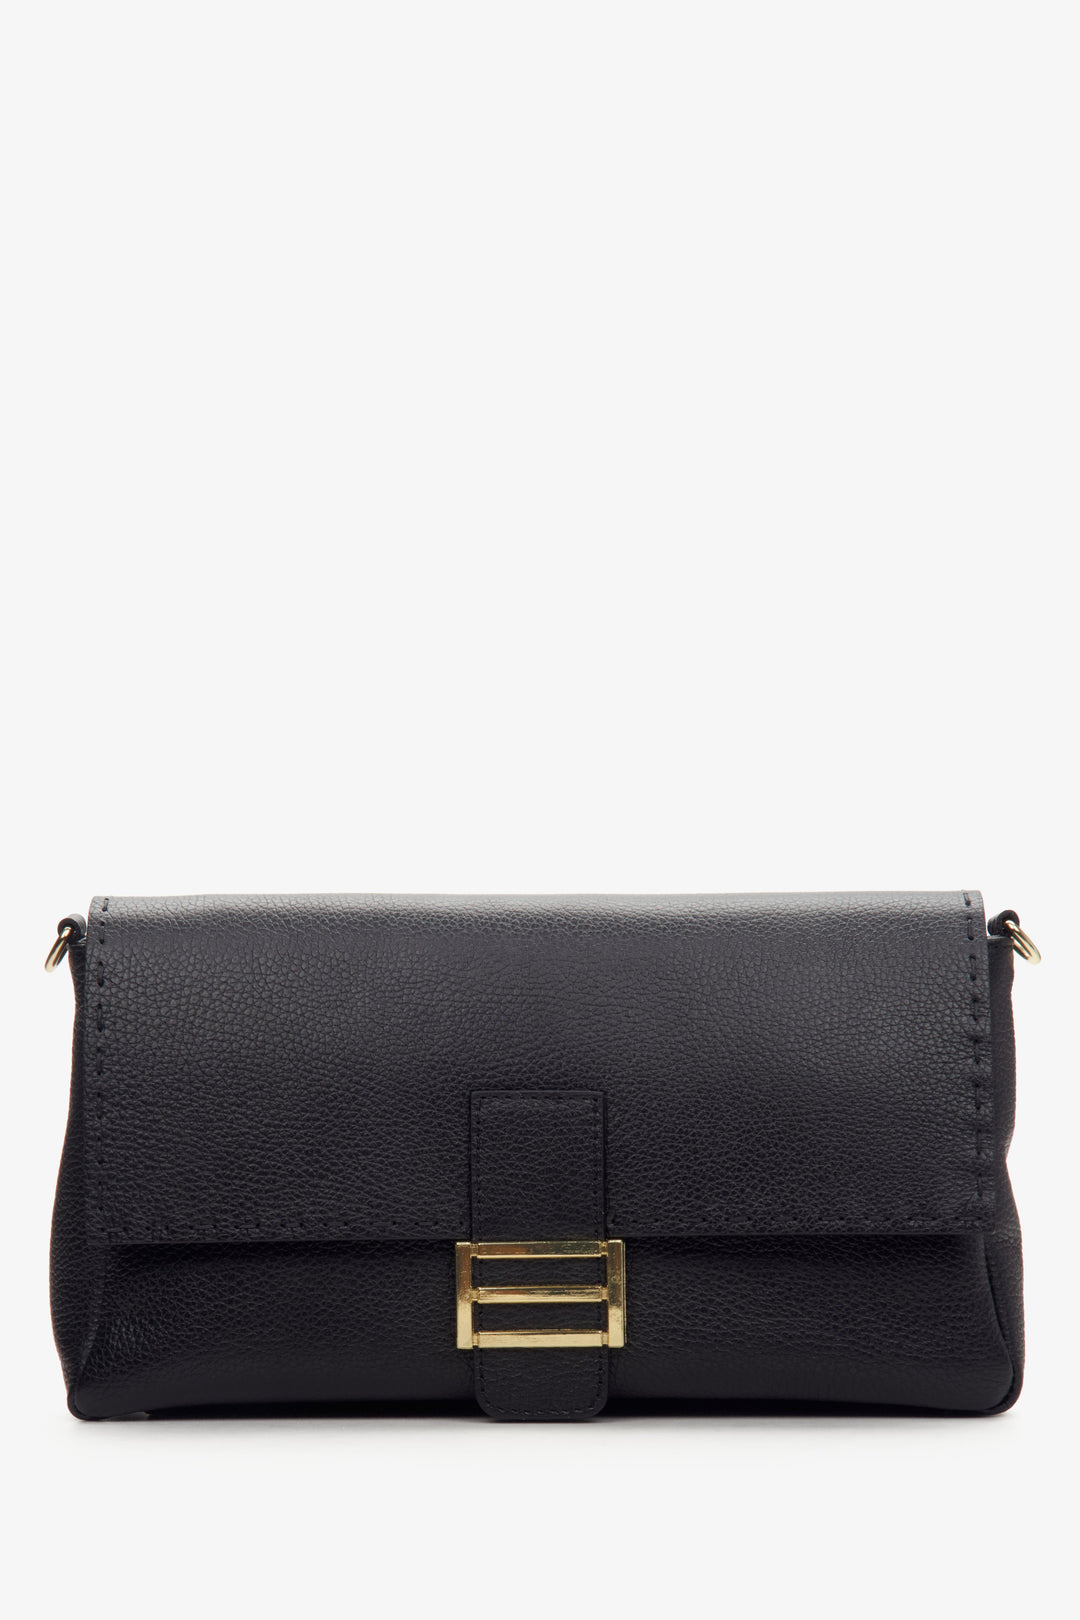 Women's Black Handbag made of Italian Genuine Leather with Golden Hardware Estro ER00114109.